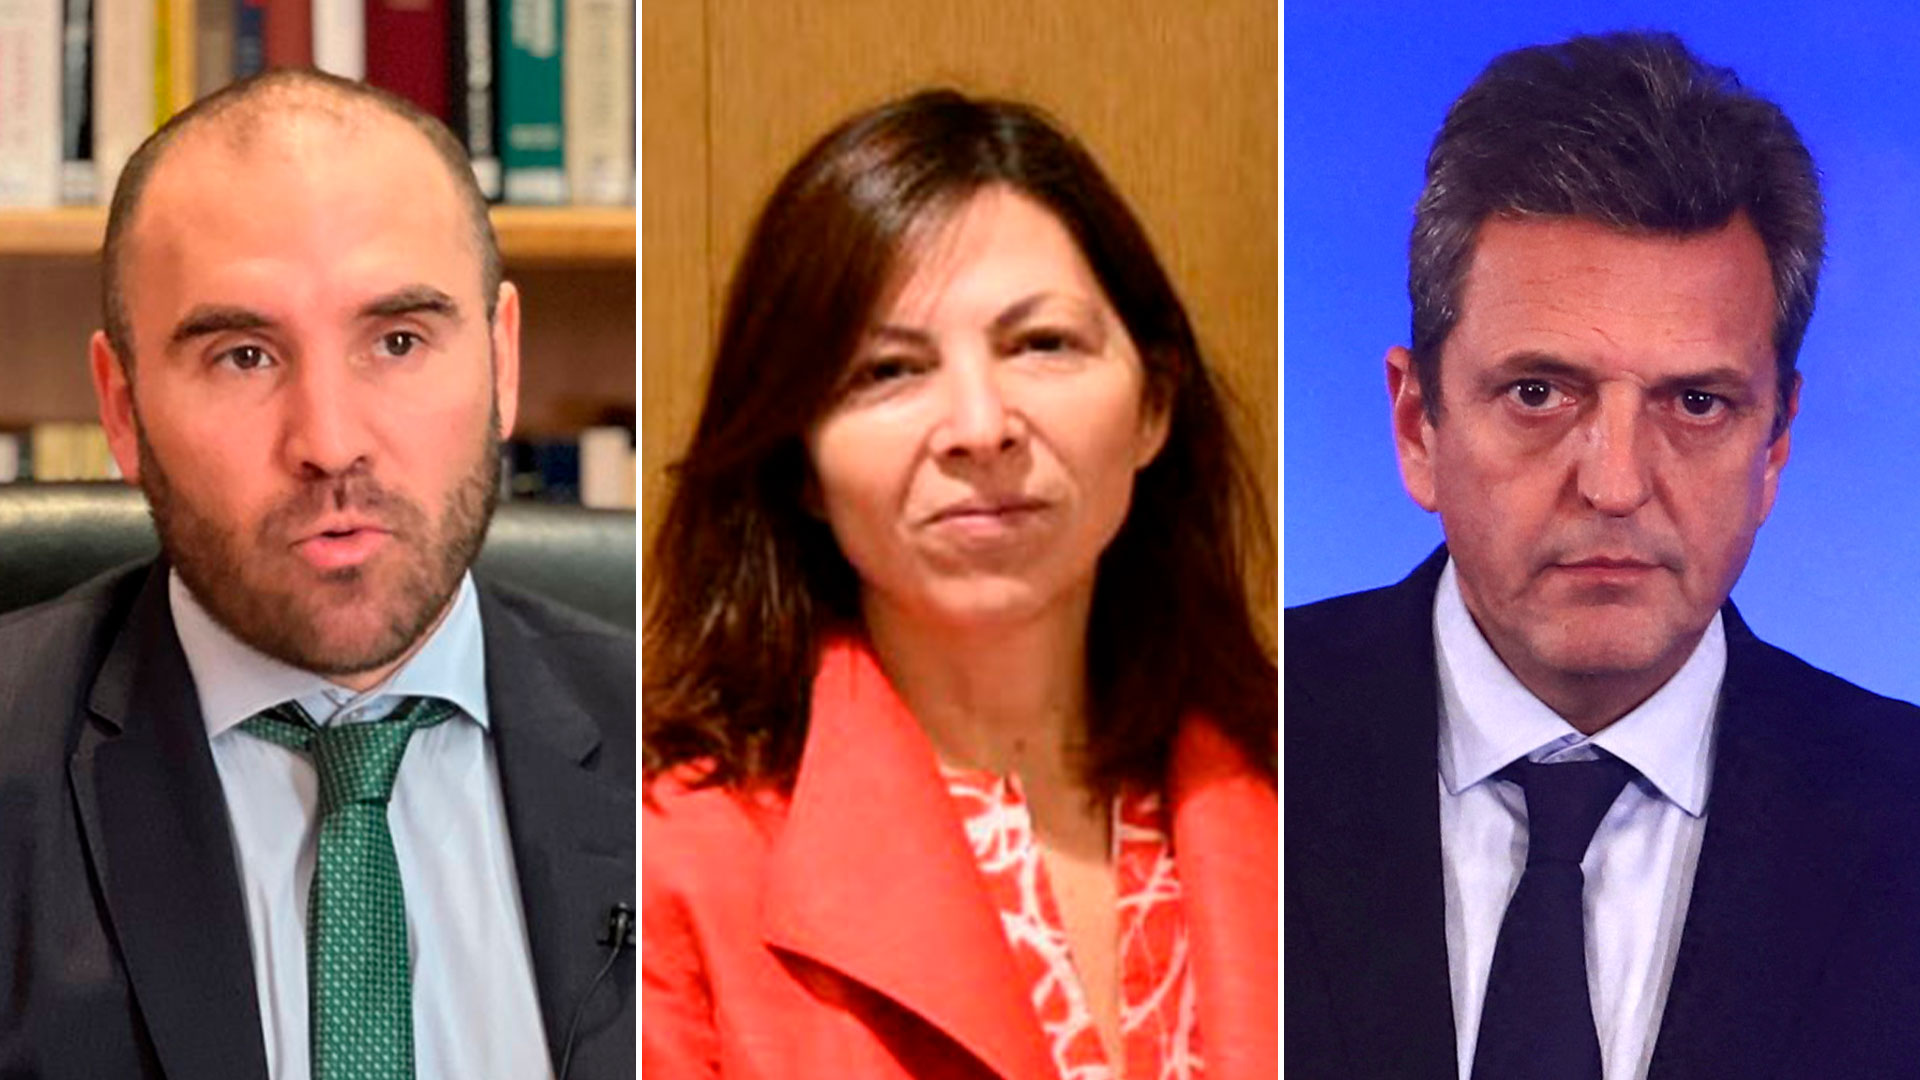 Martín Guzmán, Silvina Batakis and Sergio Massa, the 3 Ministers of Economy of Argentina in 2022